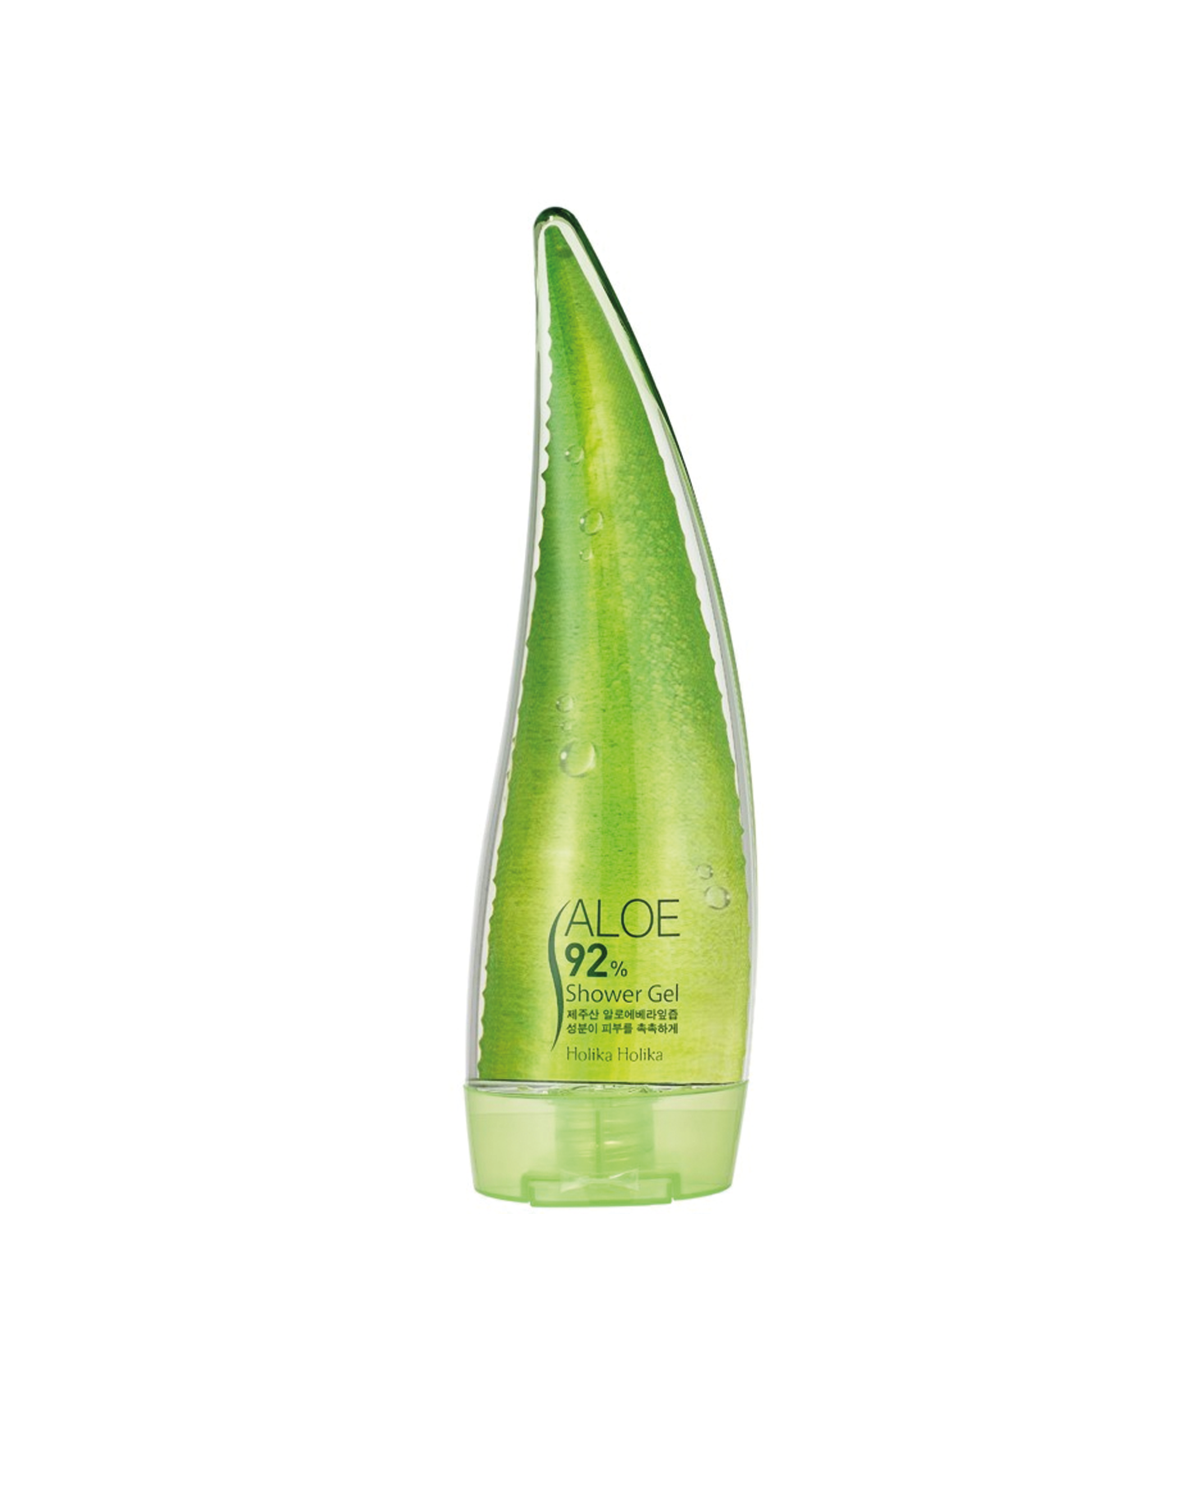 HOLIKA HOLIKA Aloe 92% Shower Gel 250 ml